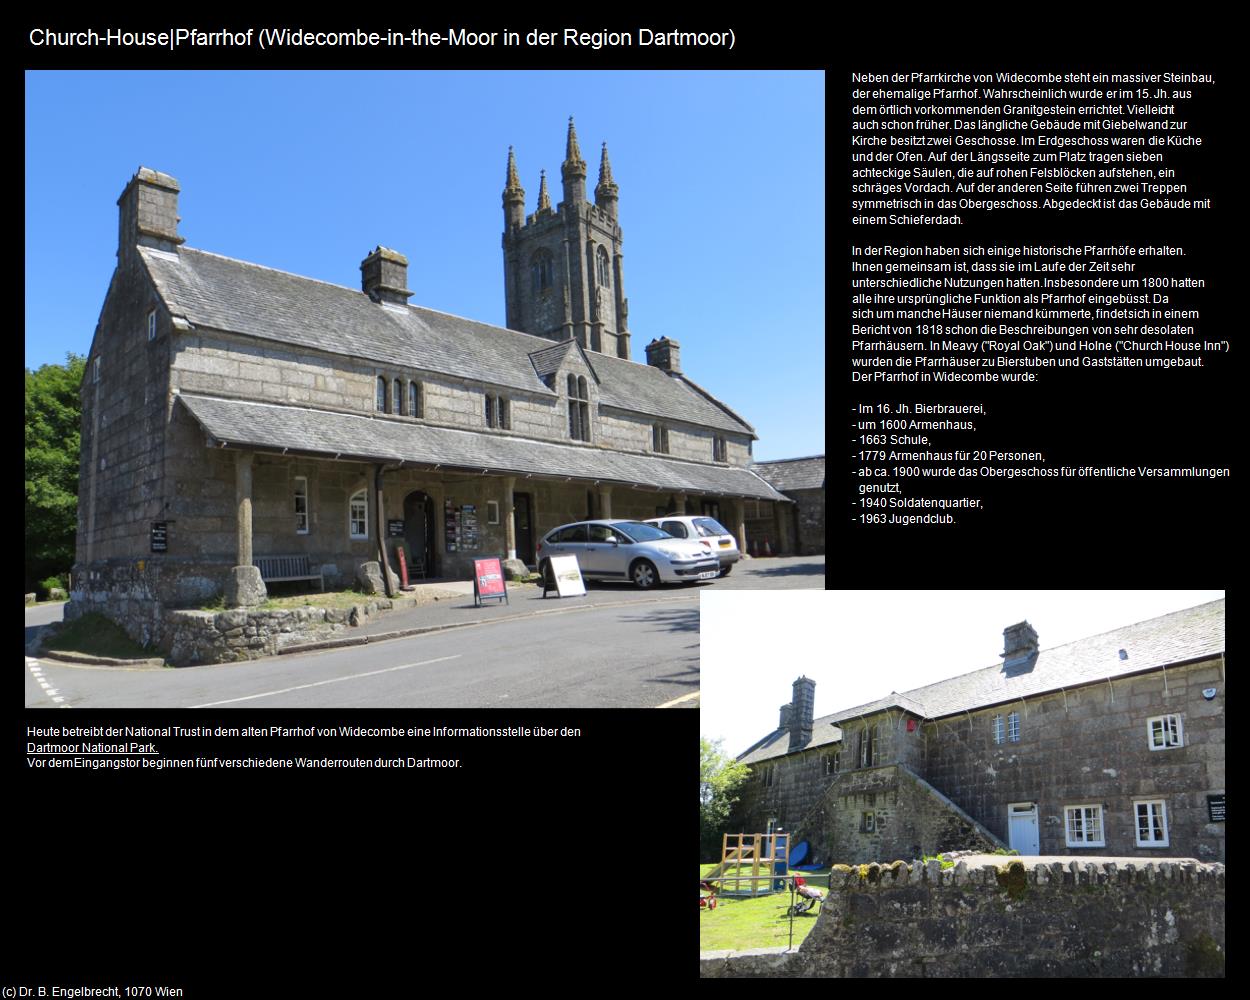 Church-House|Pfarrhof (Widecombe-in-the-Moor) (Dartmoor, England) in Kulturatlas-ENGLAND und WALES(c)B.Engelbrecht